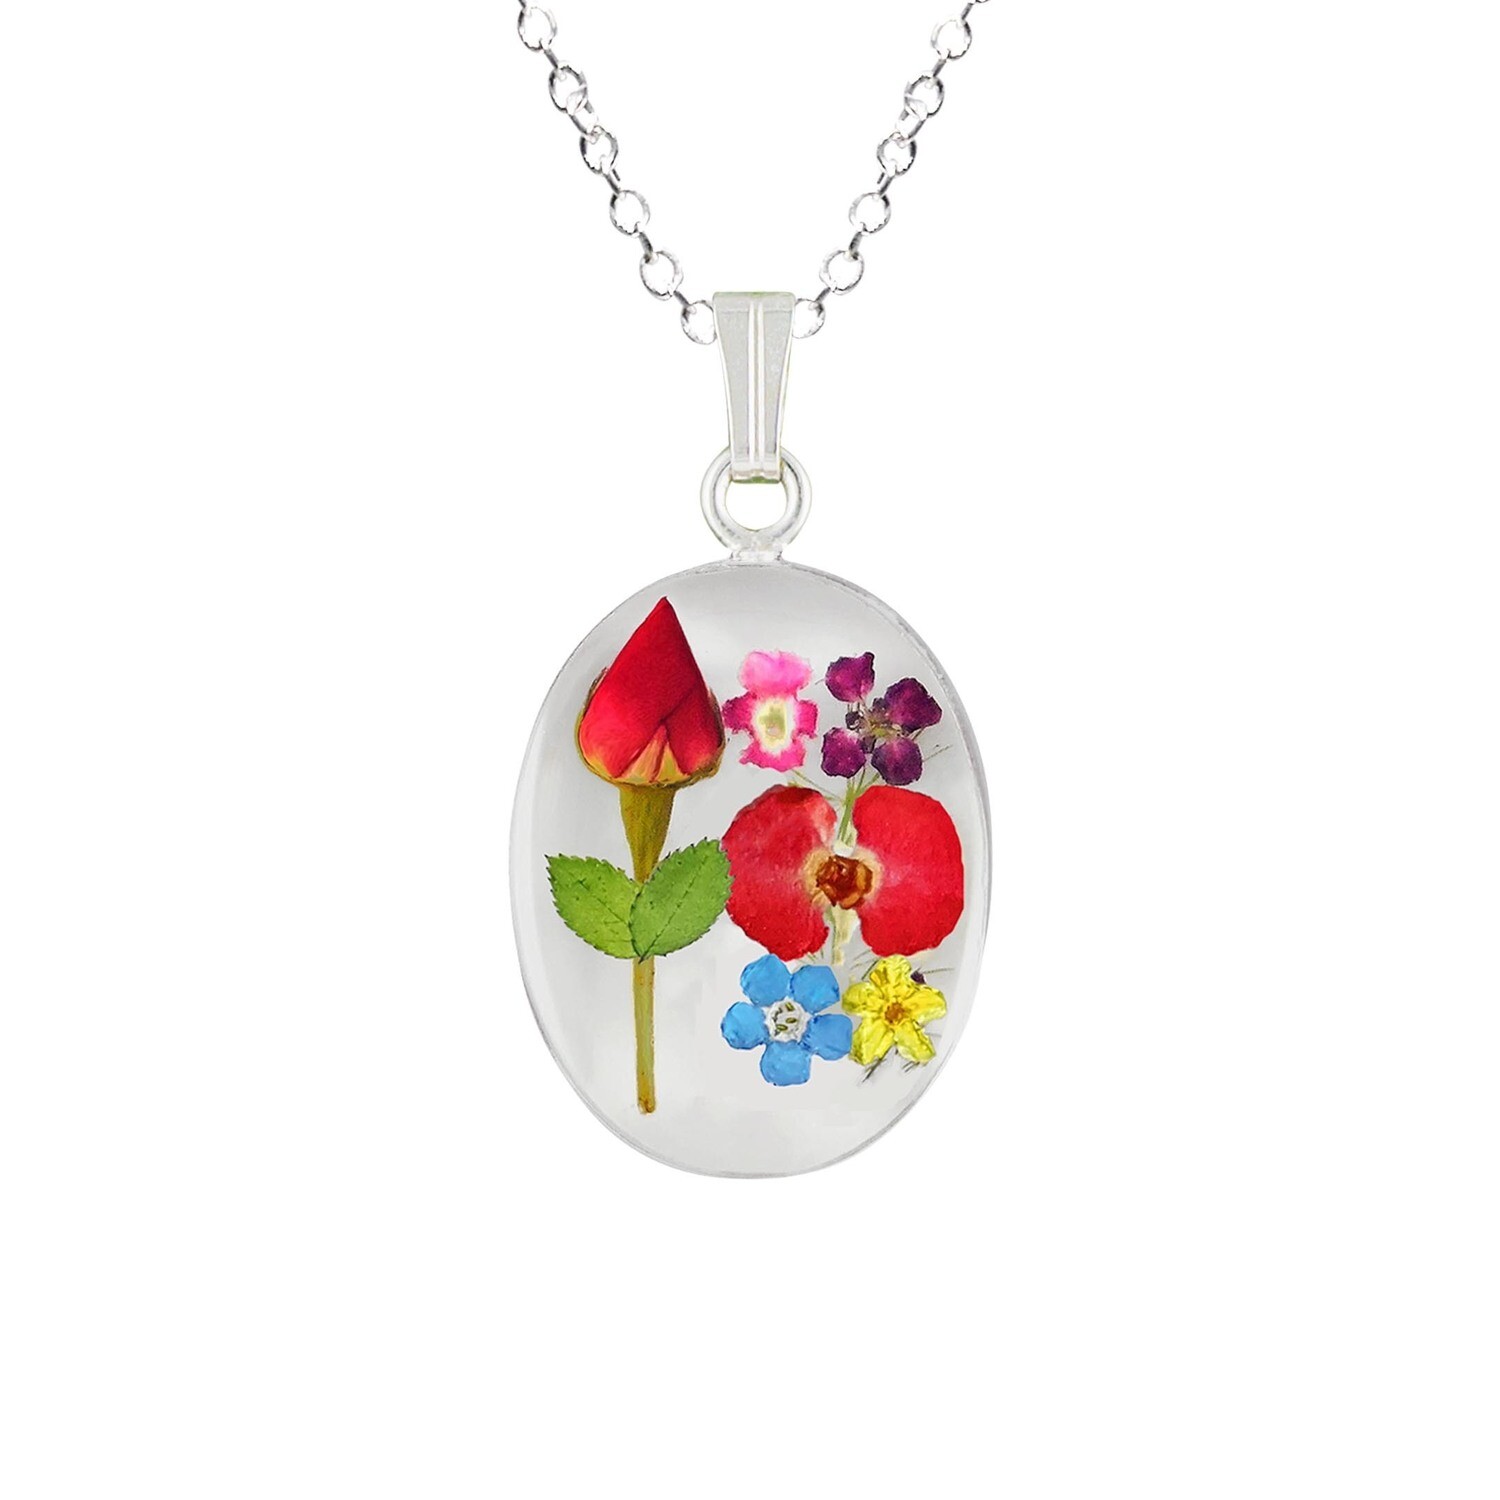 Rose & Mix Flowers Necklace, Medium Oval, Transparent